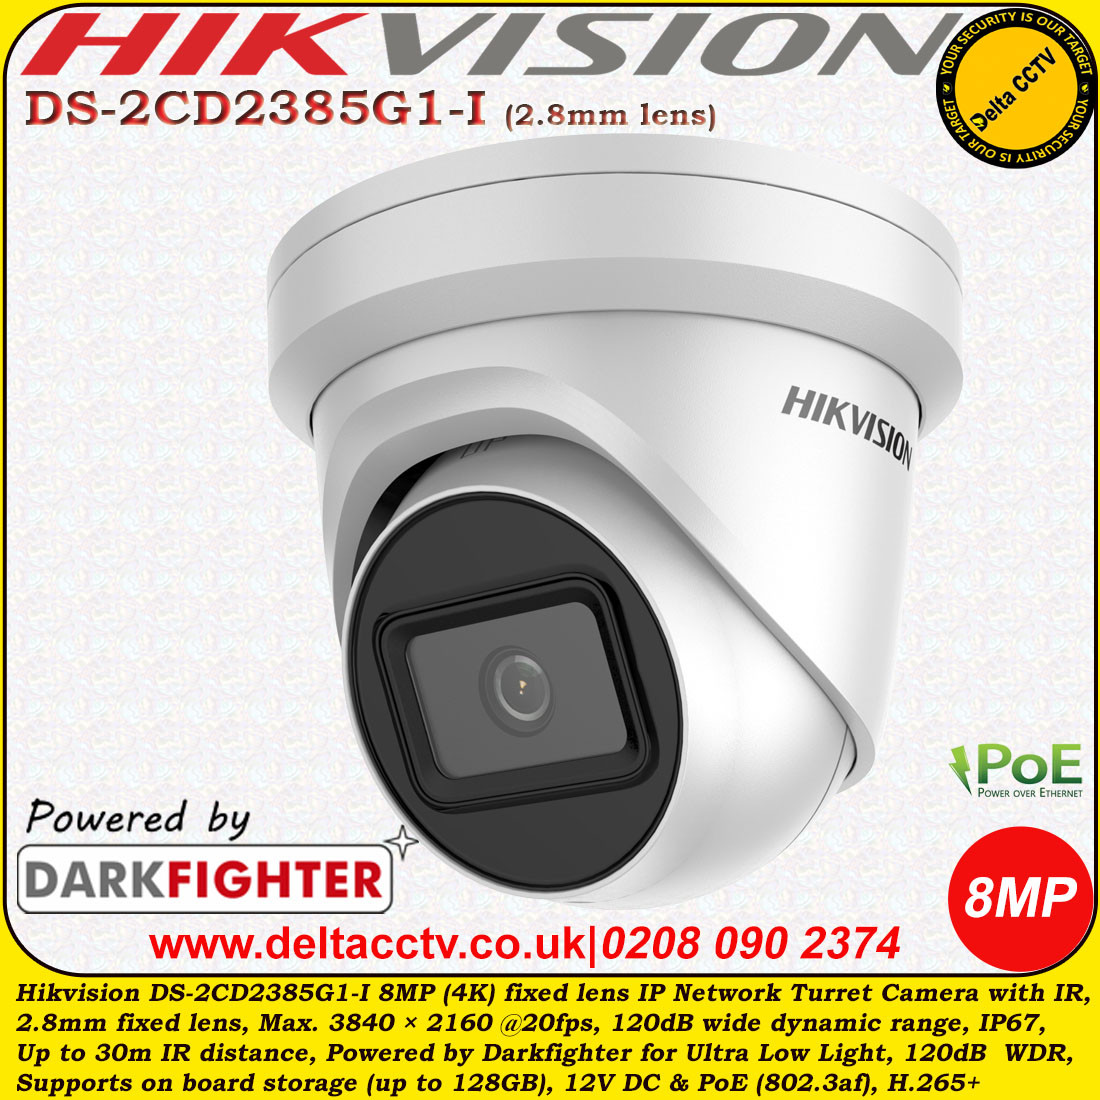 hikvision darkfighter camera price